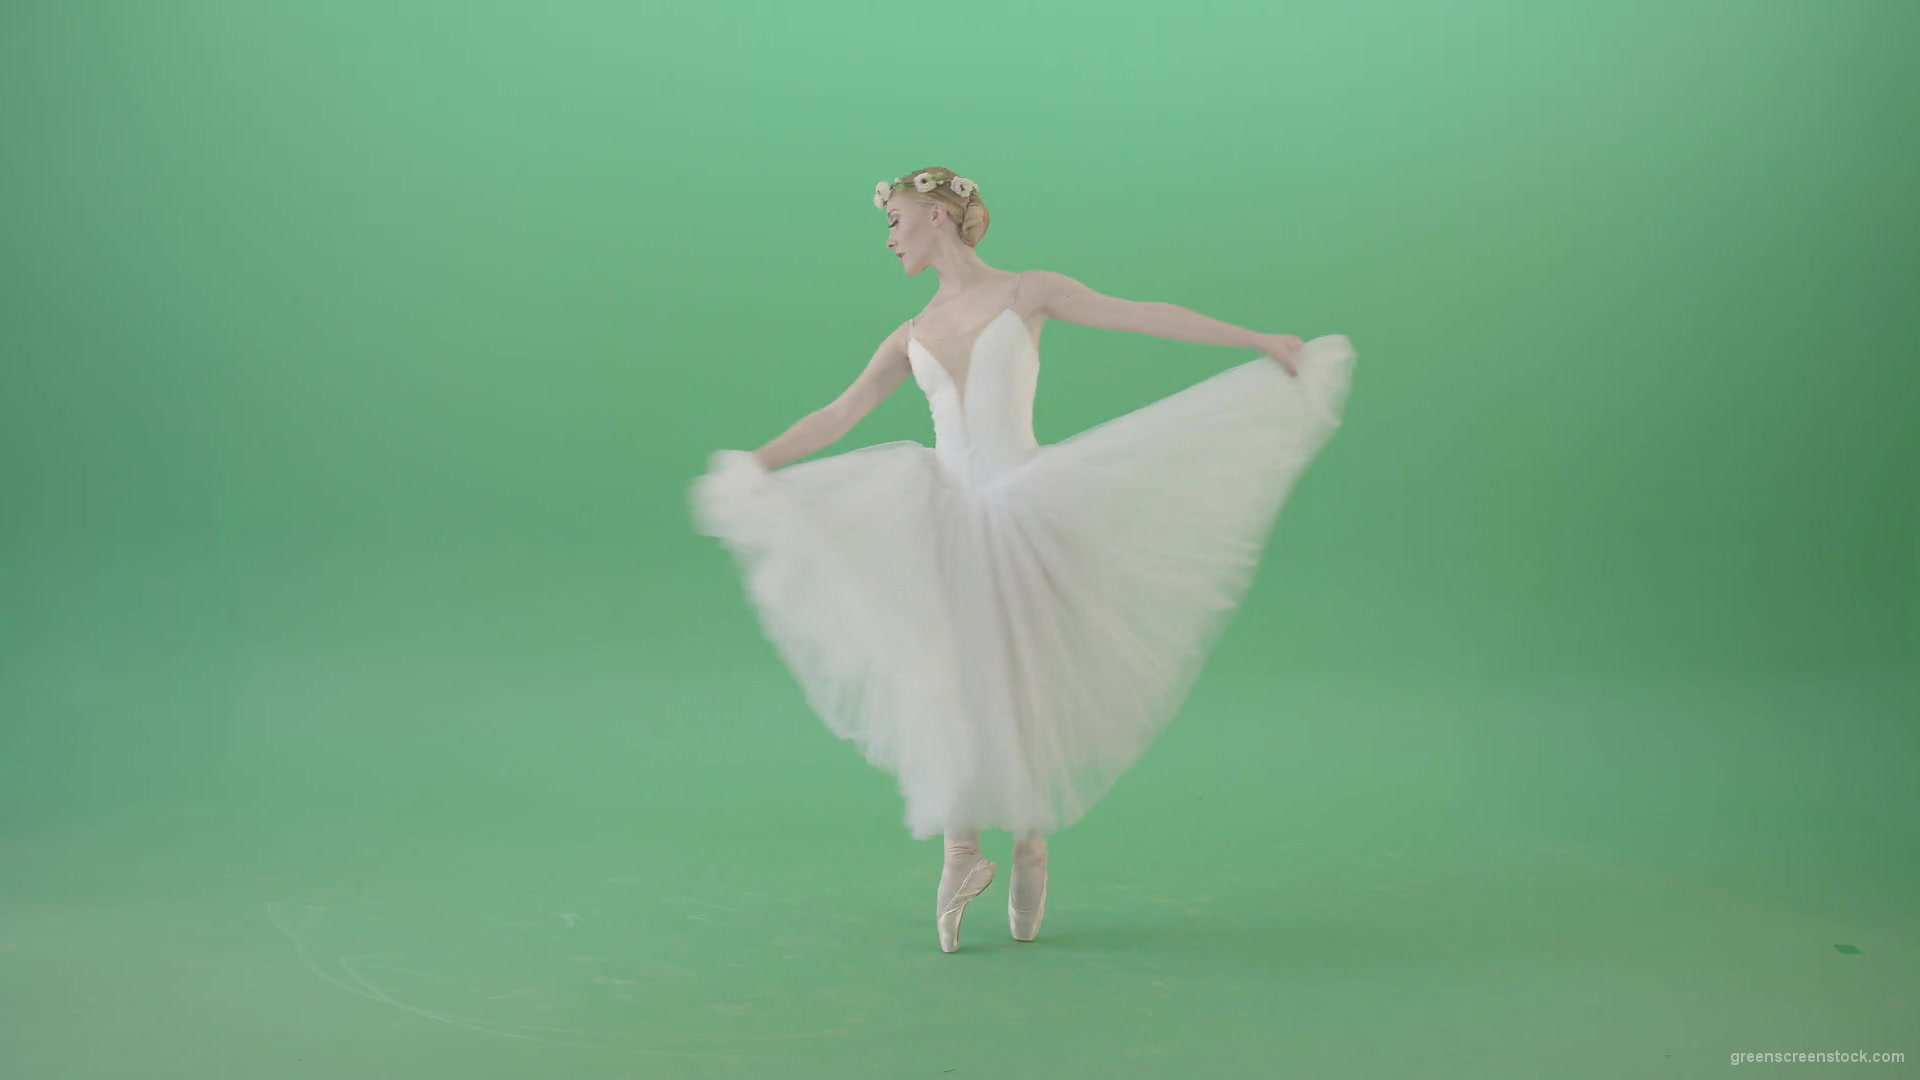 Ballerina-in-elegance-white-wedding-dress-spinning-in-dance-on-green-screen-4K-Video-Footage-1920_002 Green Screen Stock